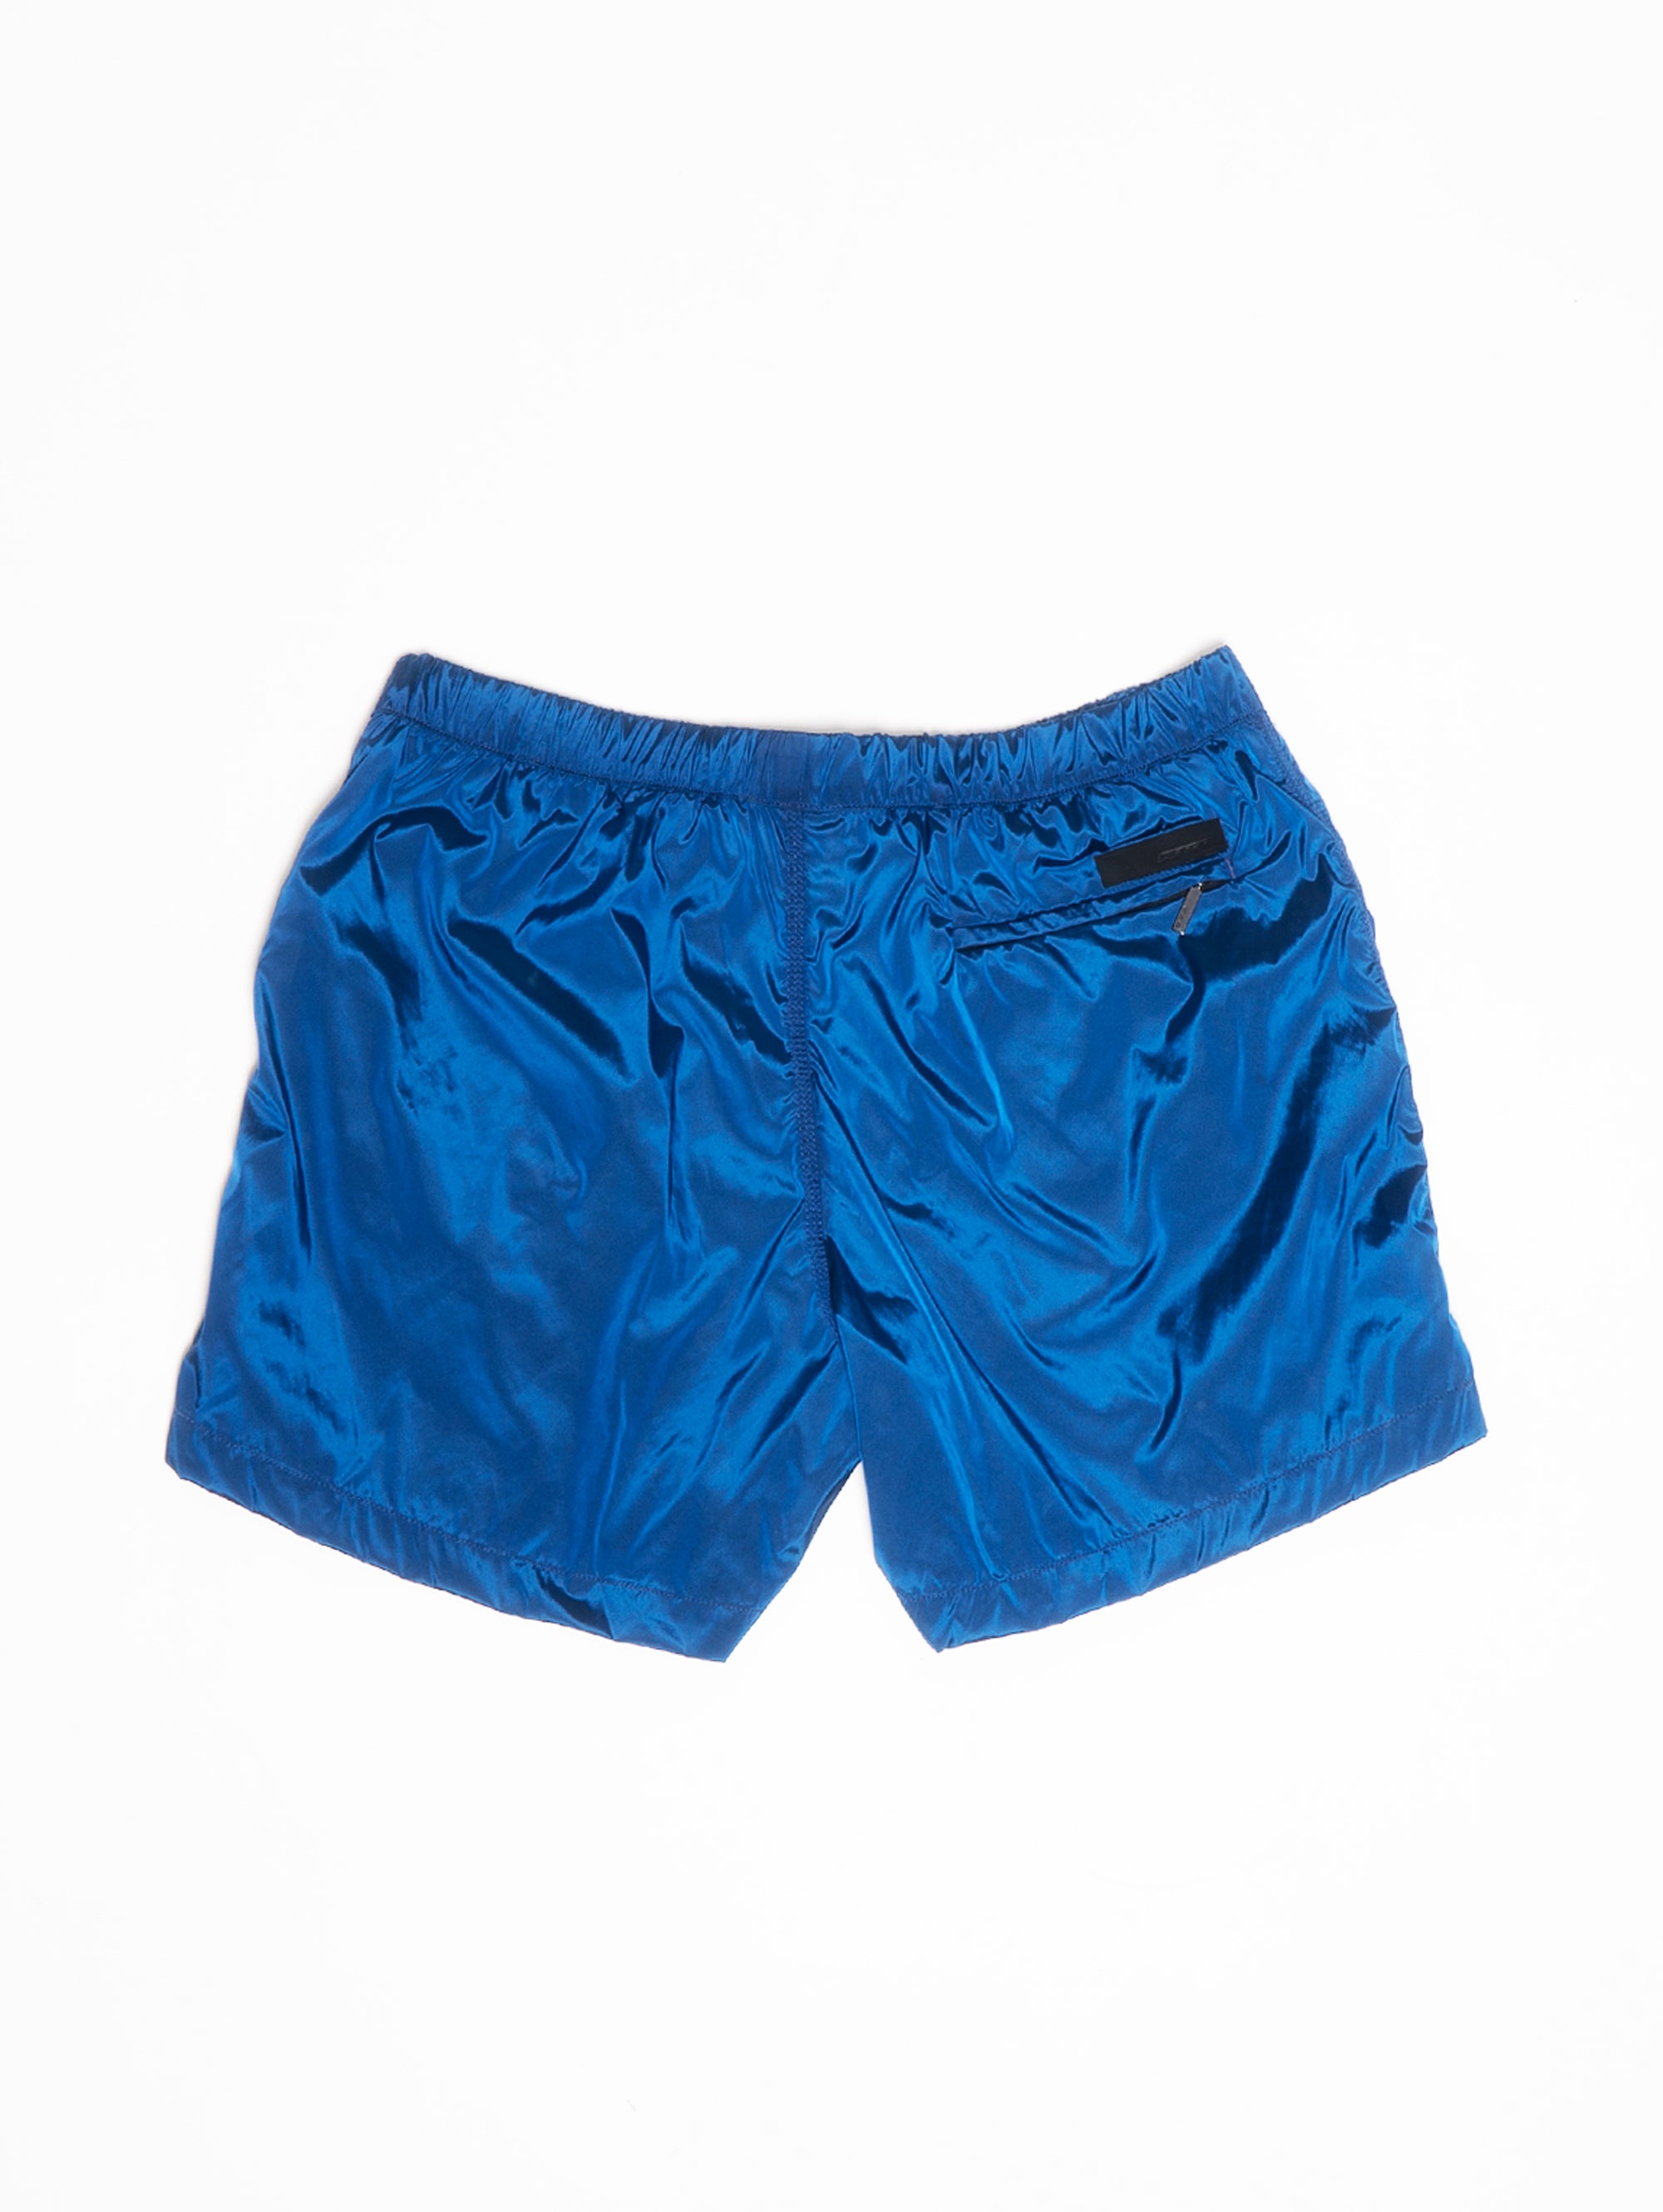 Bluette Shiny Badeanzug-Boxer